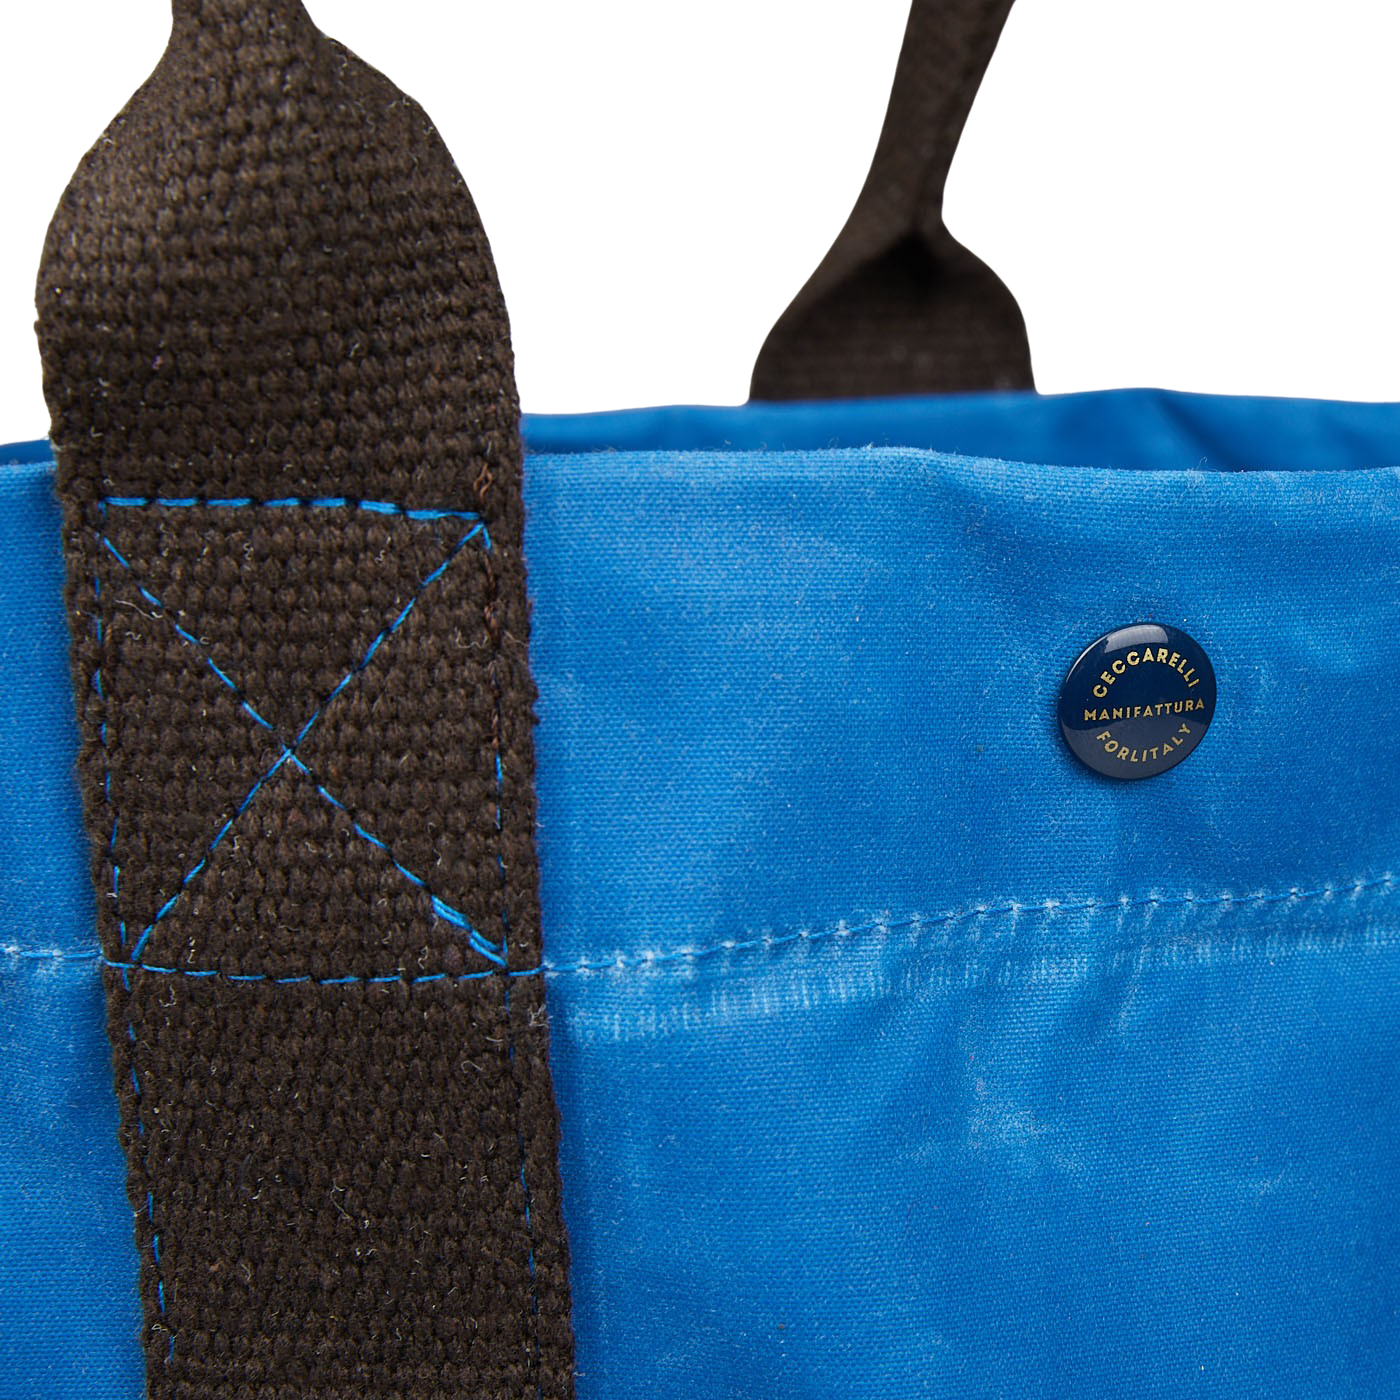 A close up of a Manifattura Ceccarelli jeans blue waxed cotton tote bag.